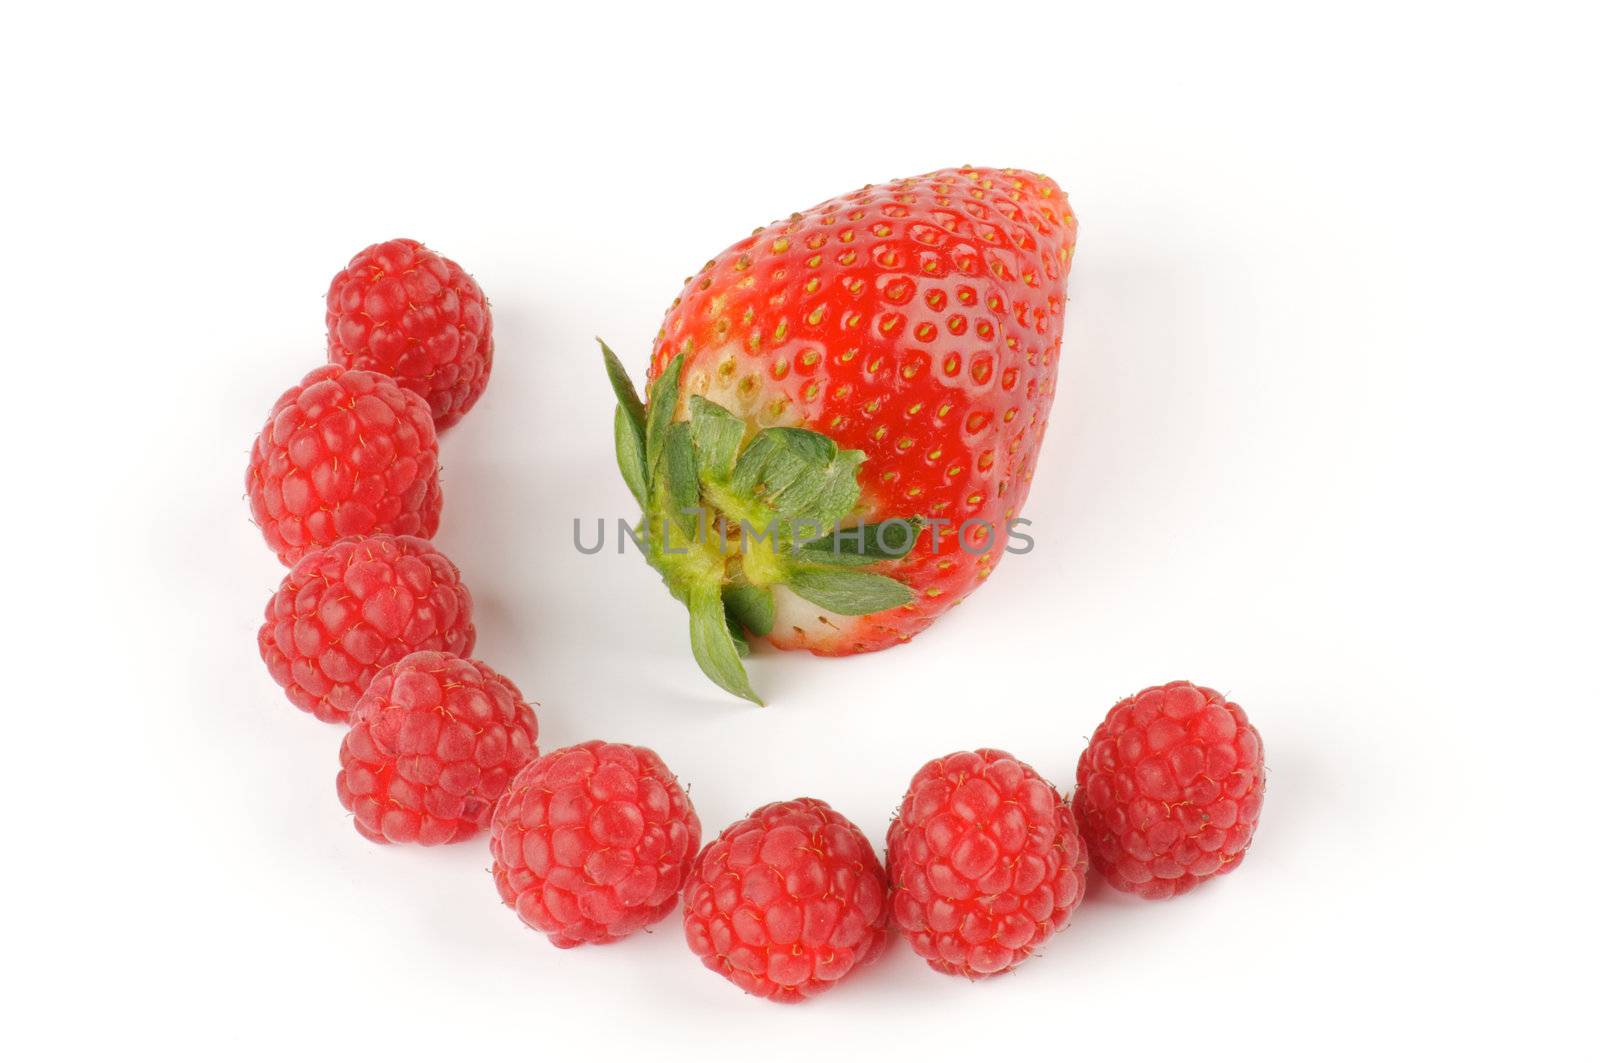 Arrangement of Strawberry and raspberries by zhekos